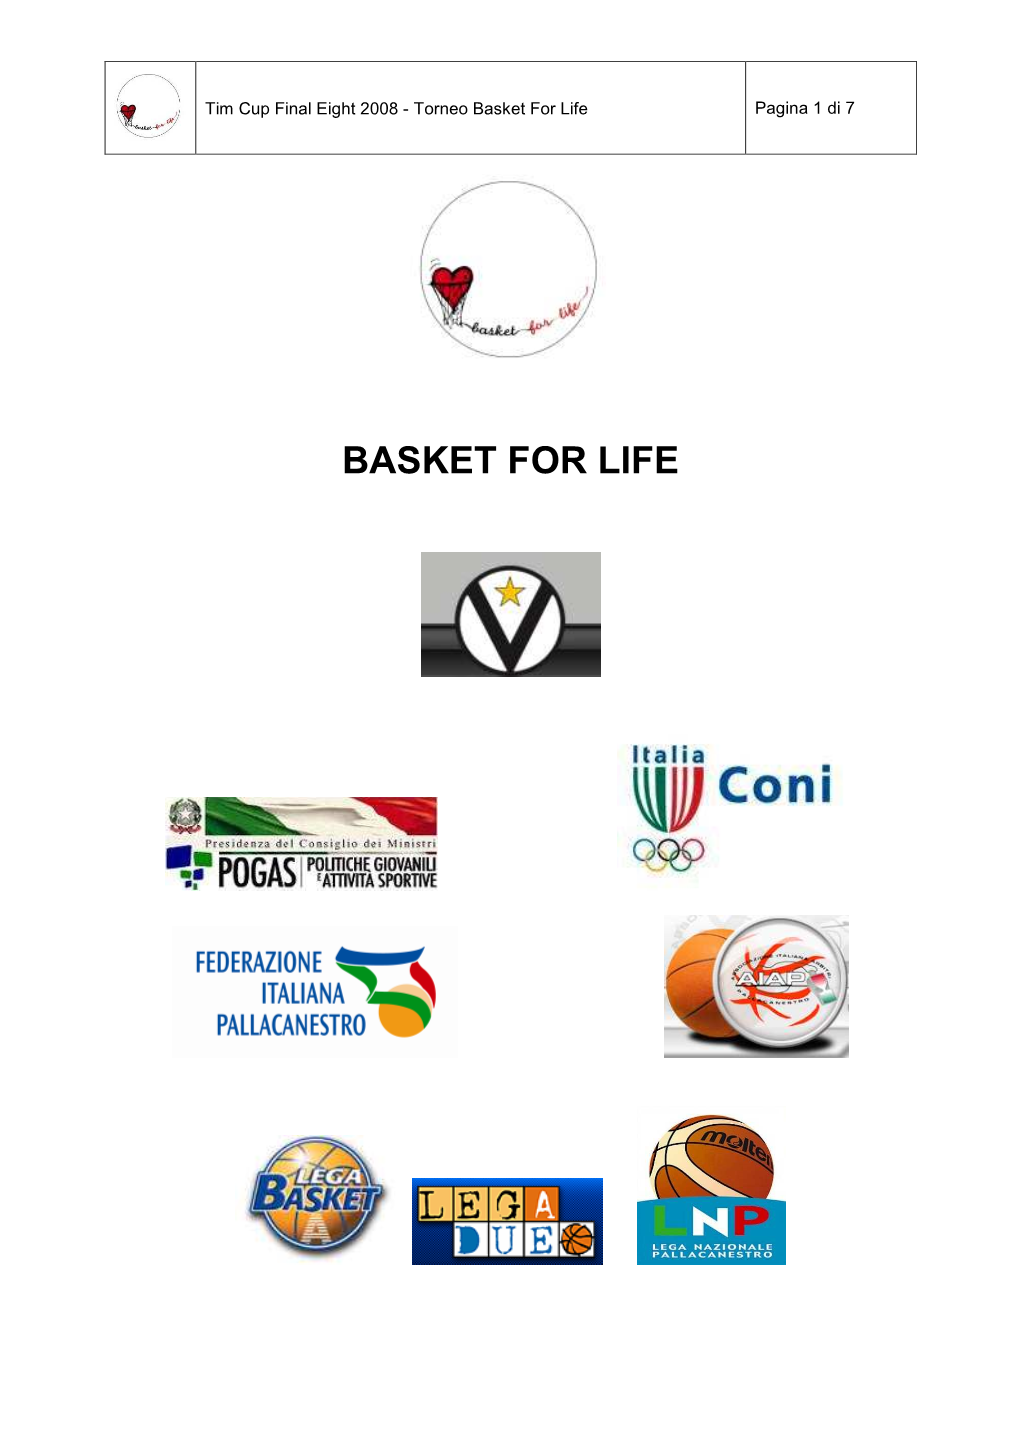 Basket for Life Pagina 1 Di 7